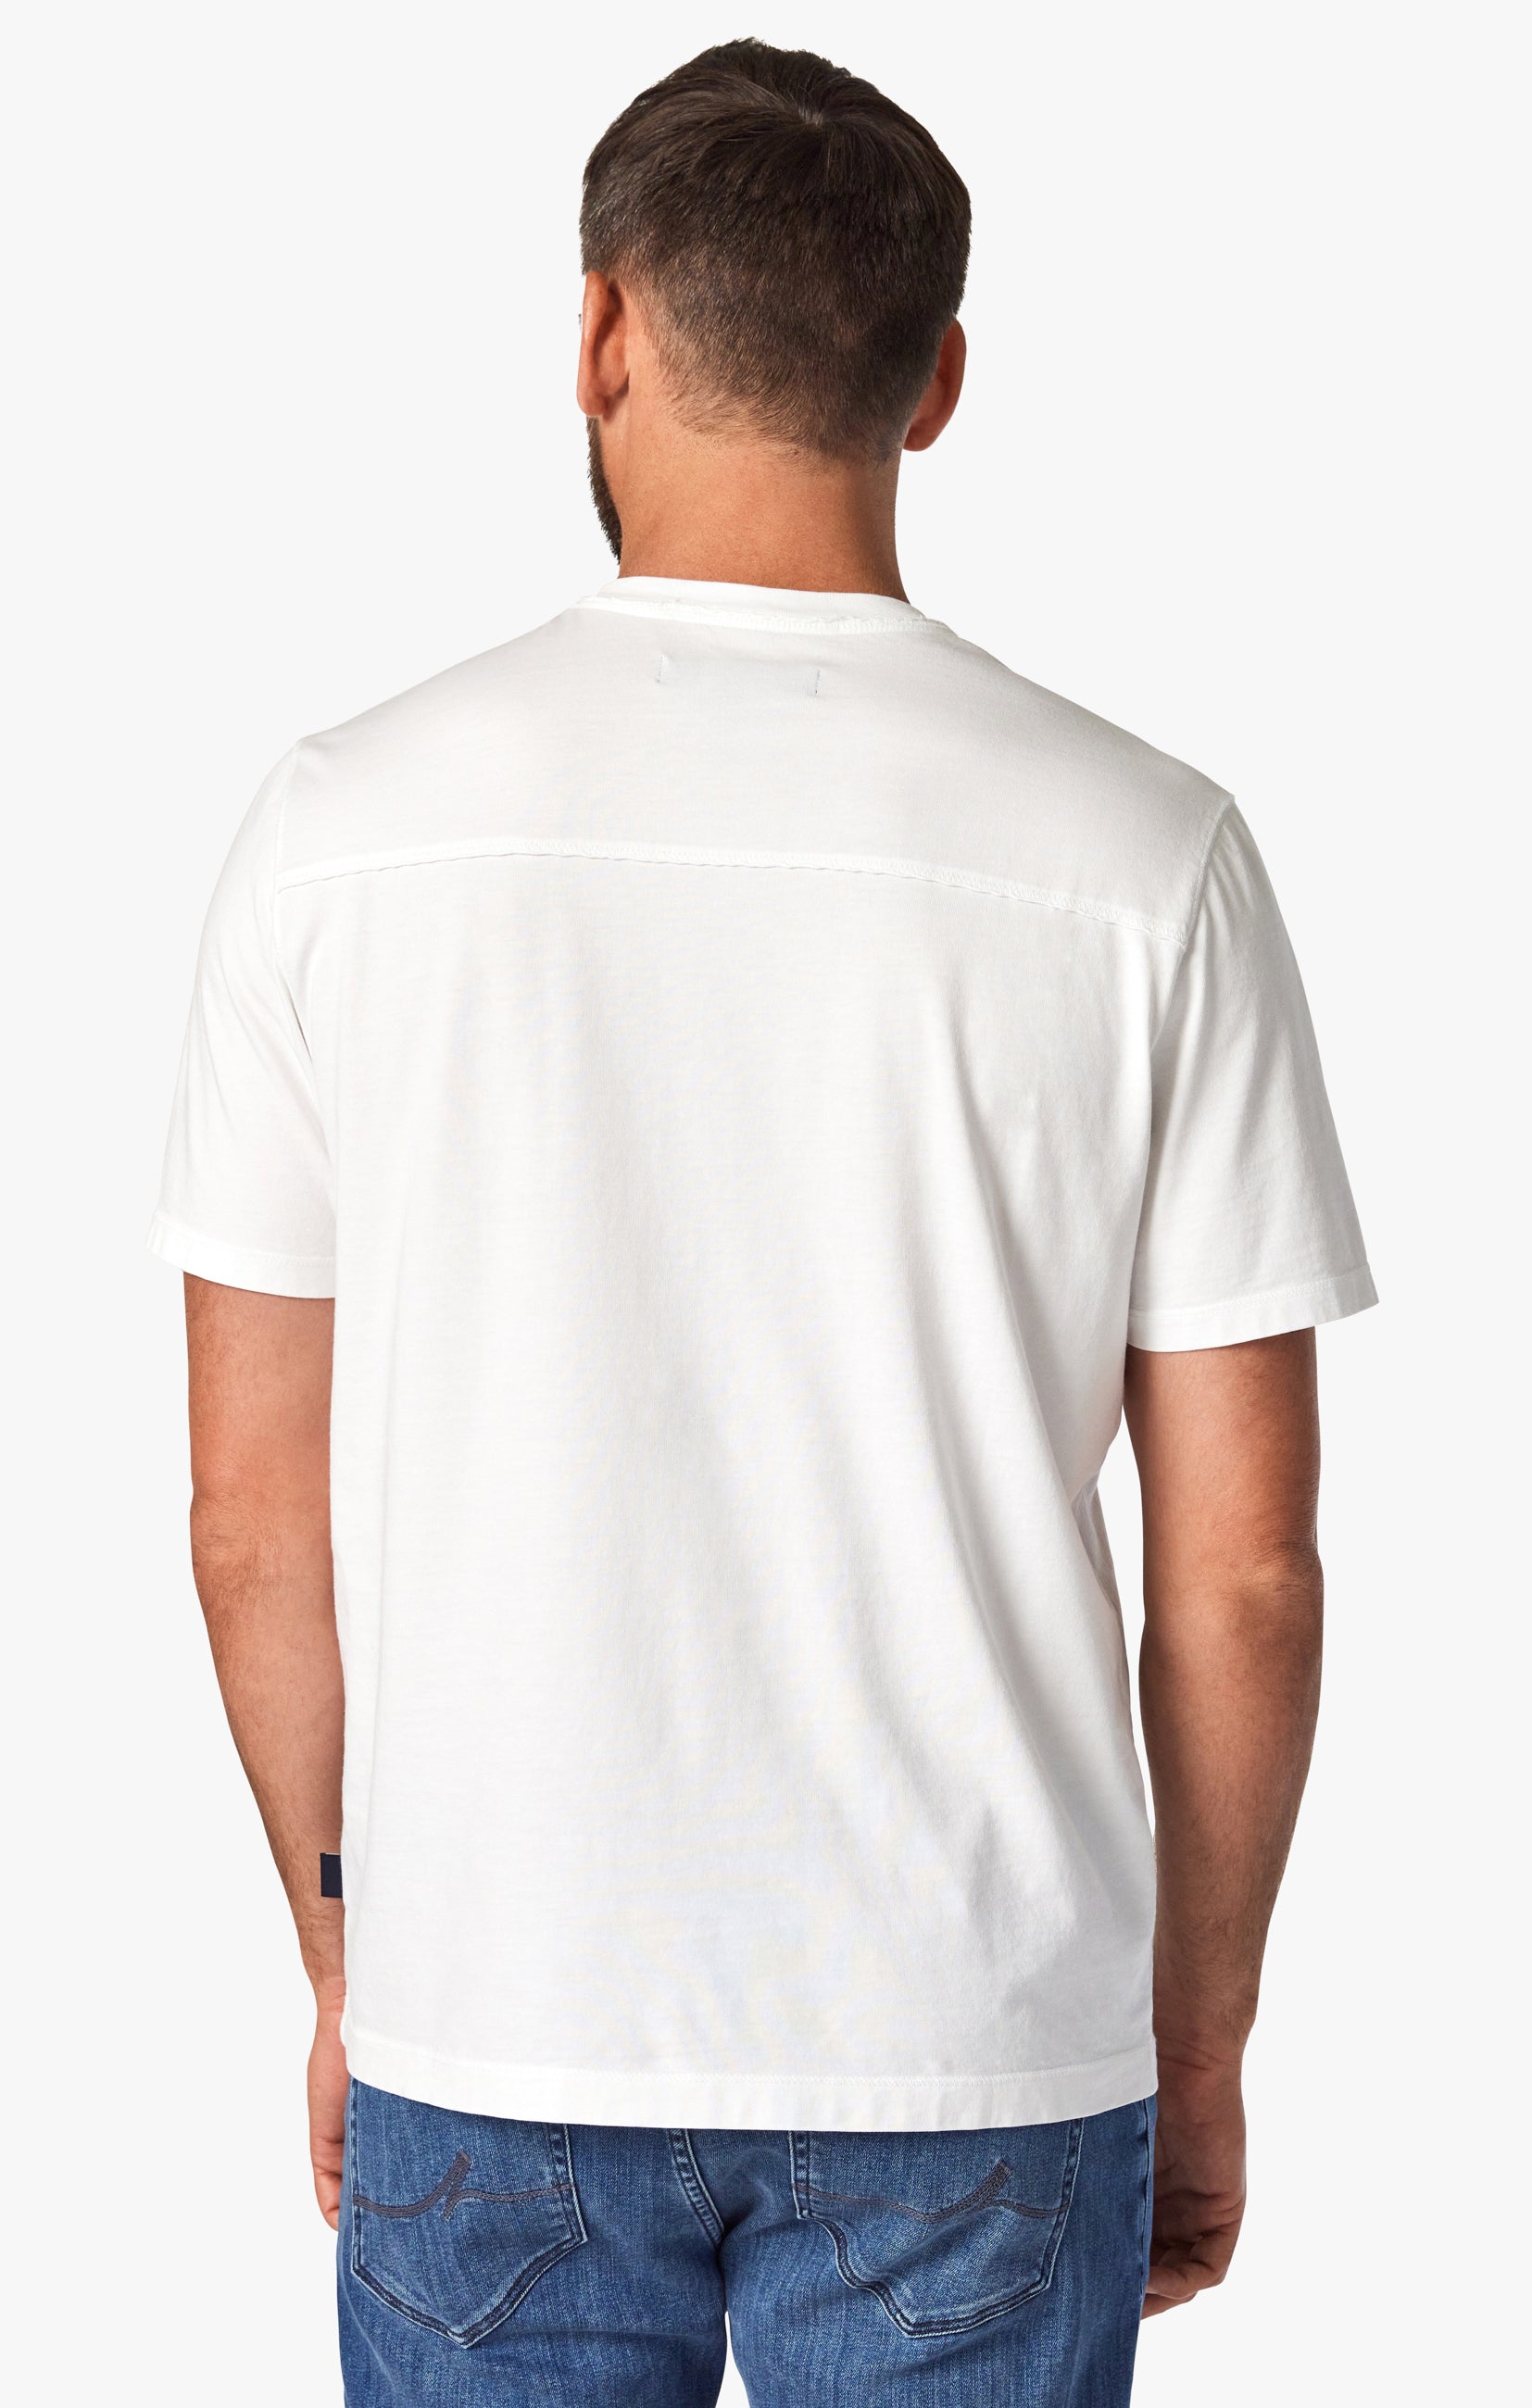 Deconstructed V-Neck T-Shirt in White Image 2